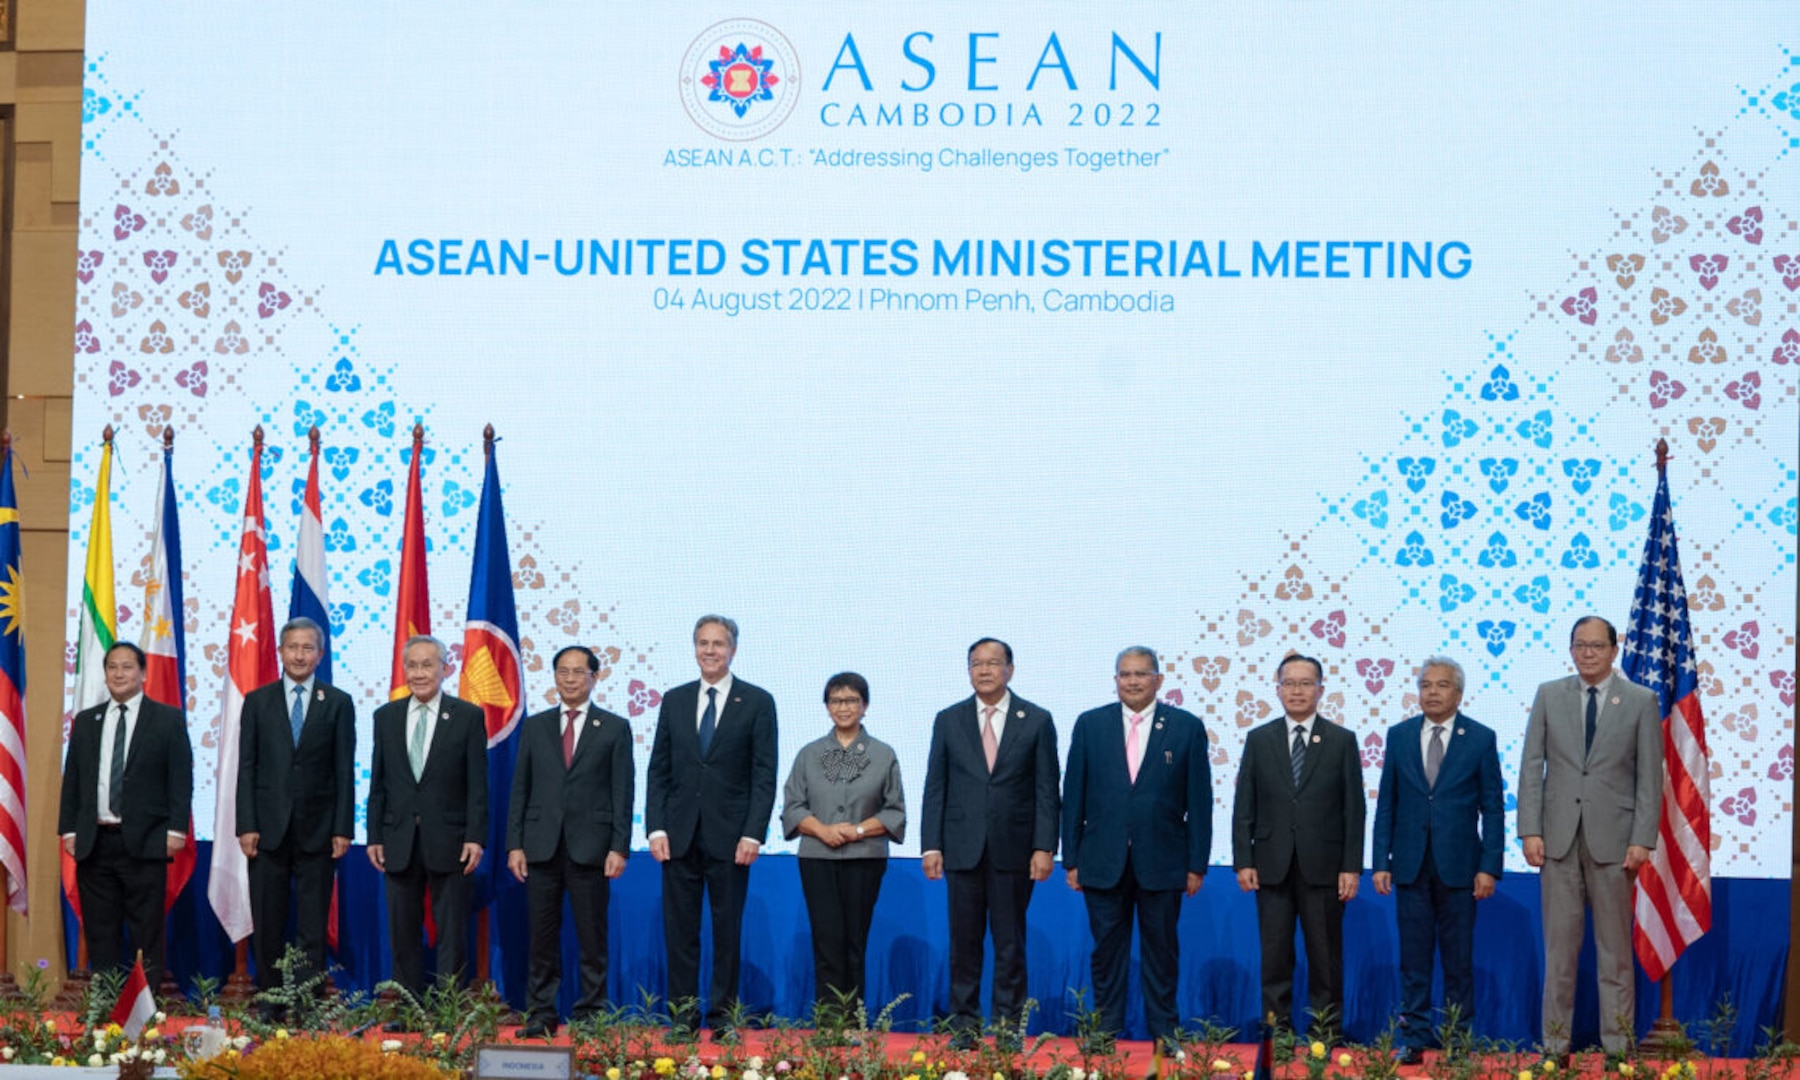 The ASEAN-U.S. Ministerial Meeting